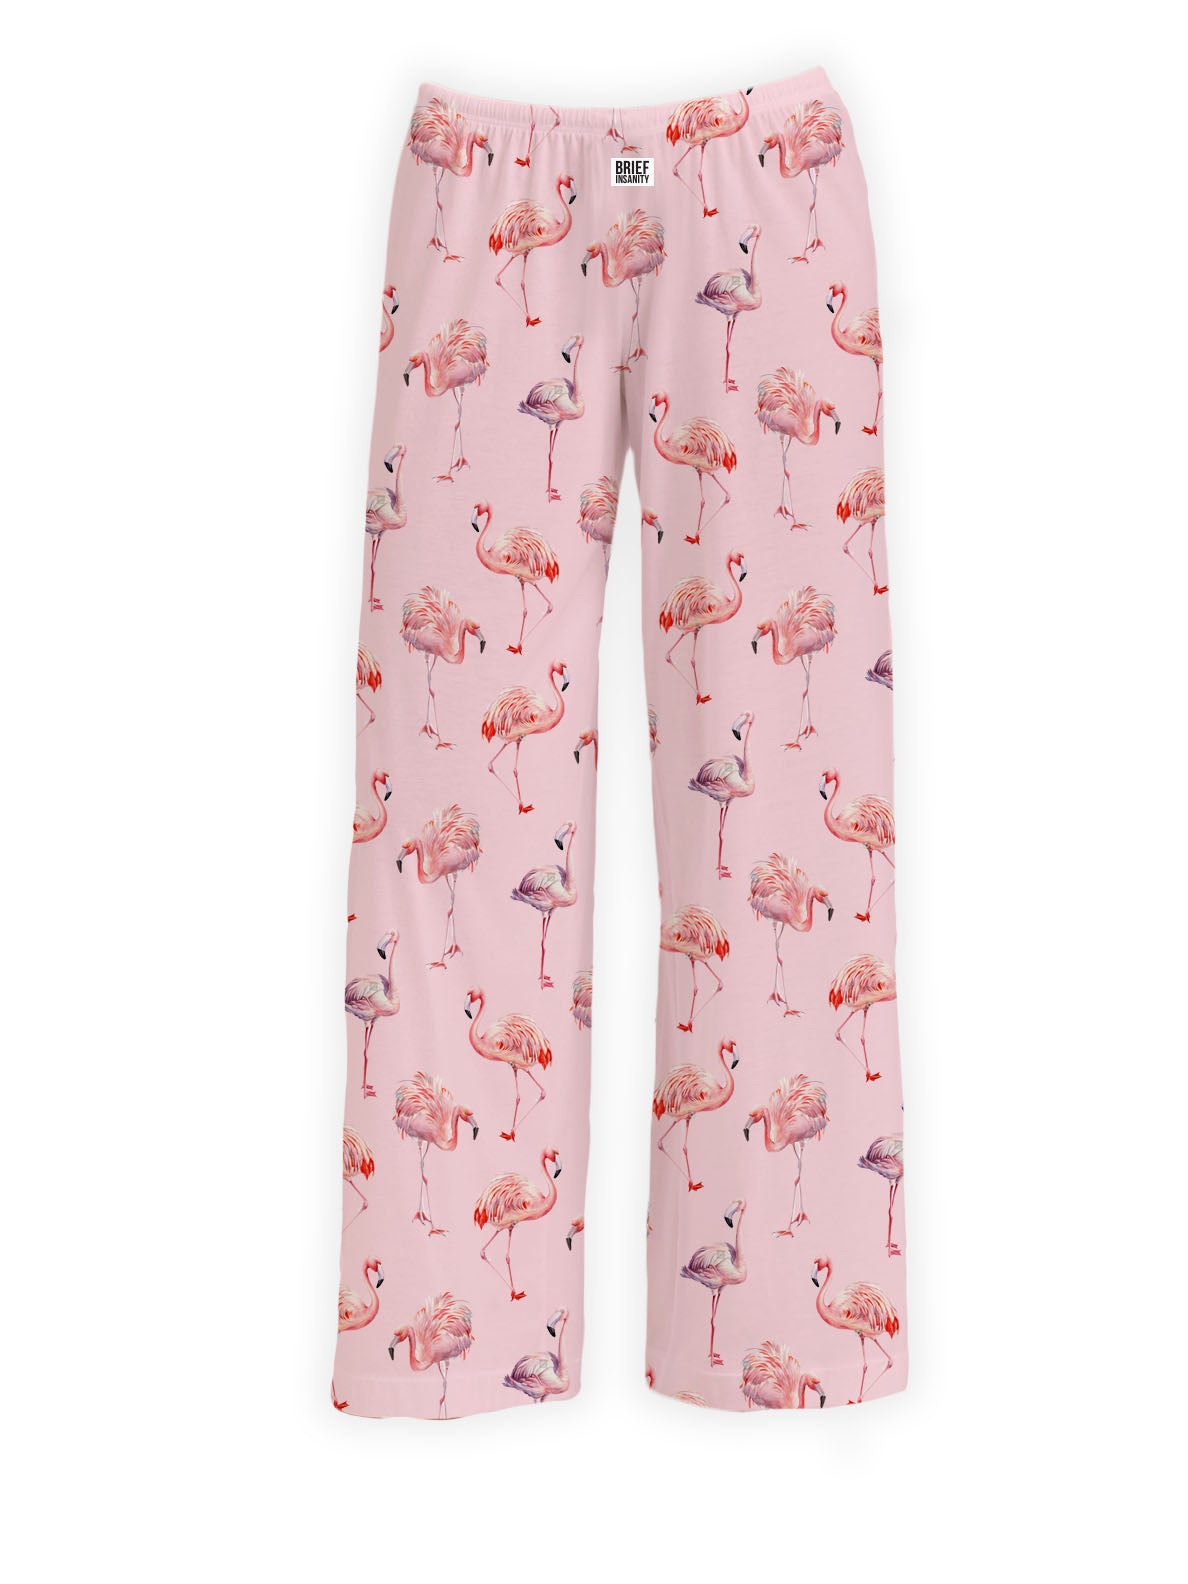 BRIEF INSANITY Pink Flamingo Pattern Pajama Lounge Pants